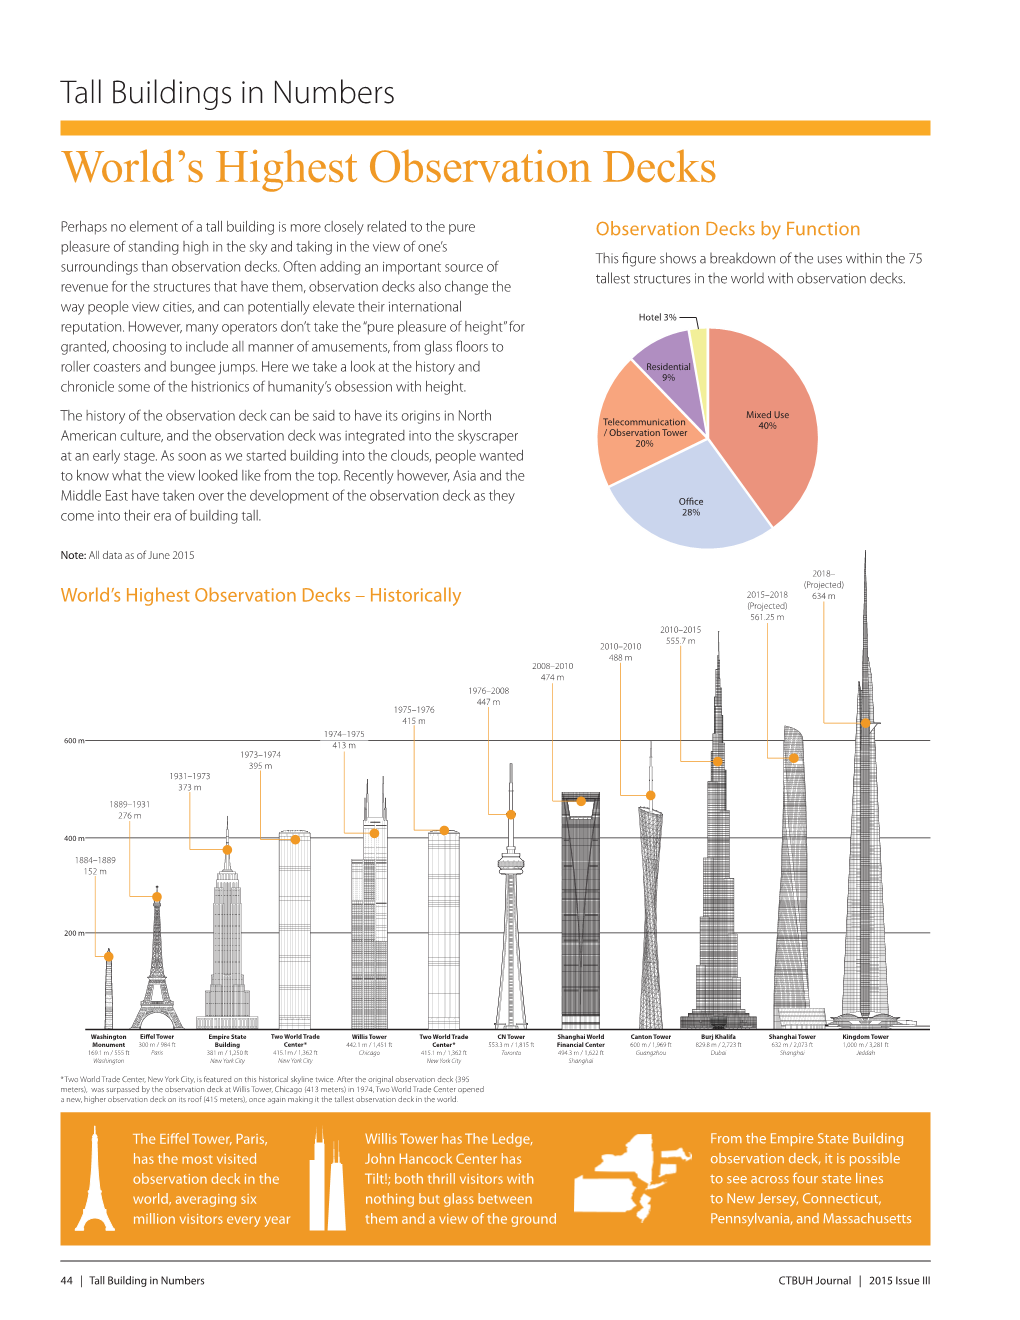 World's Highest Observation Decks